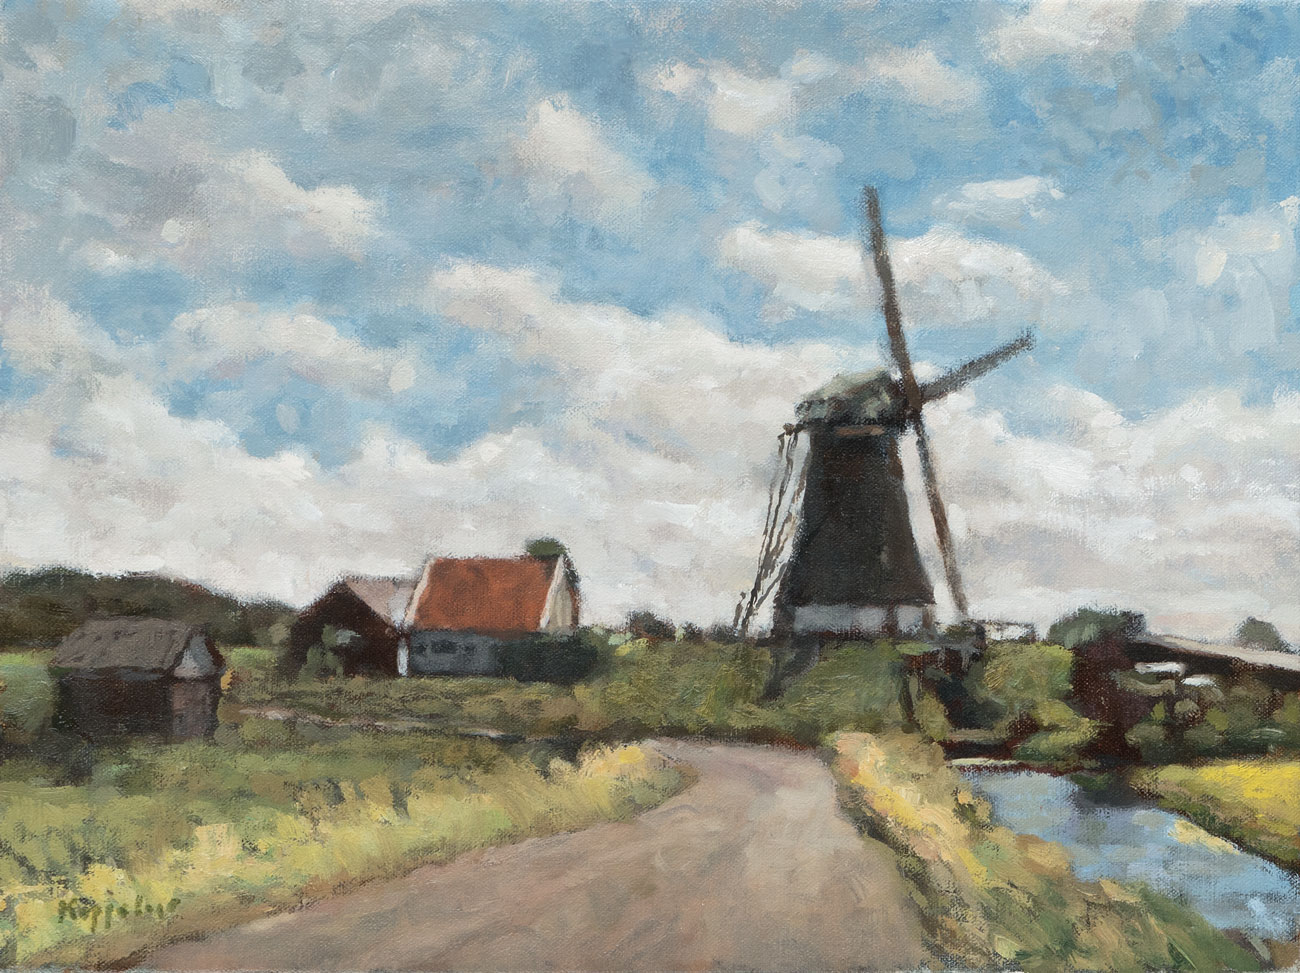 art work: 'Landscape with Windmill' oil on canvas by Dutch painter Frans Koppelaar.